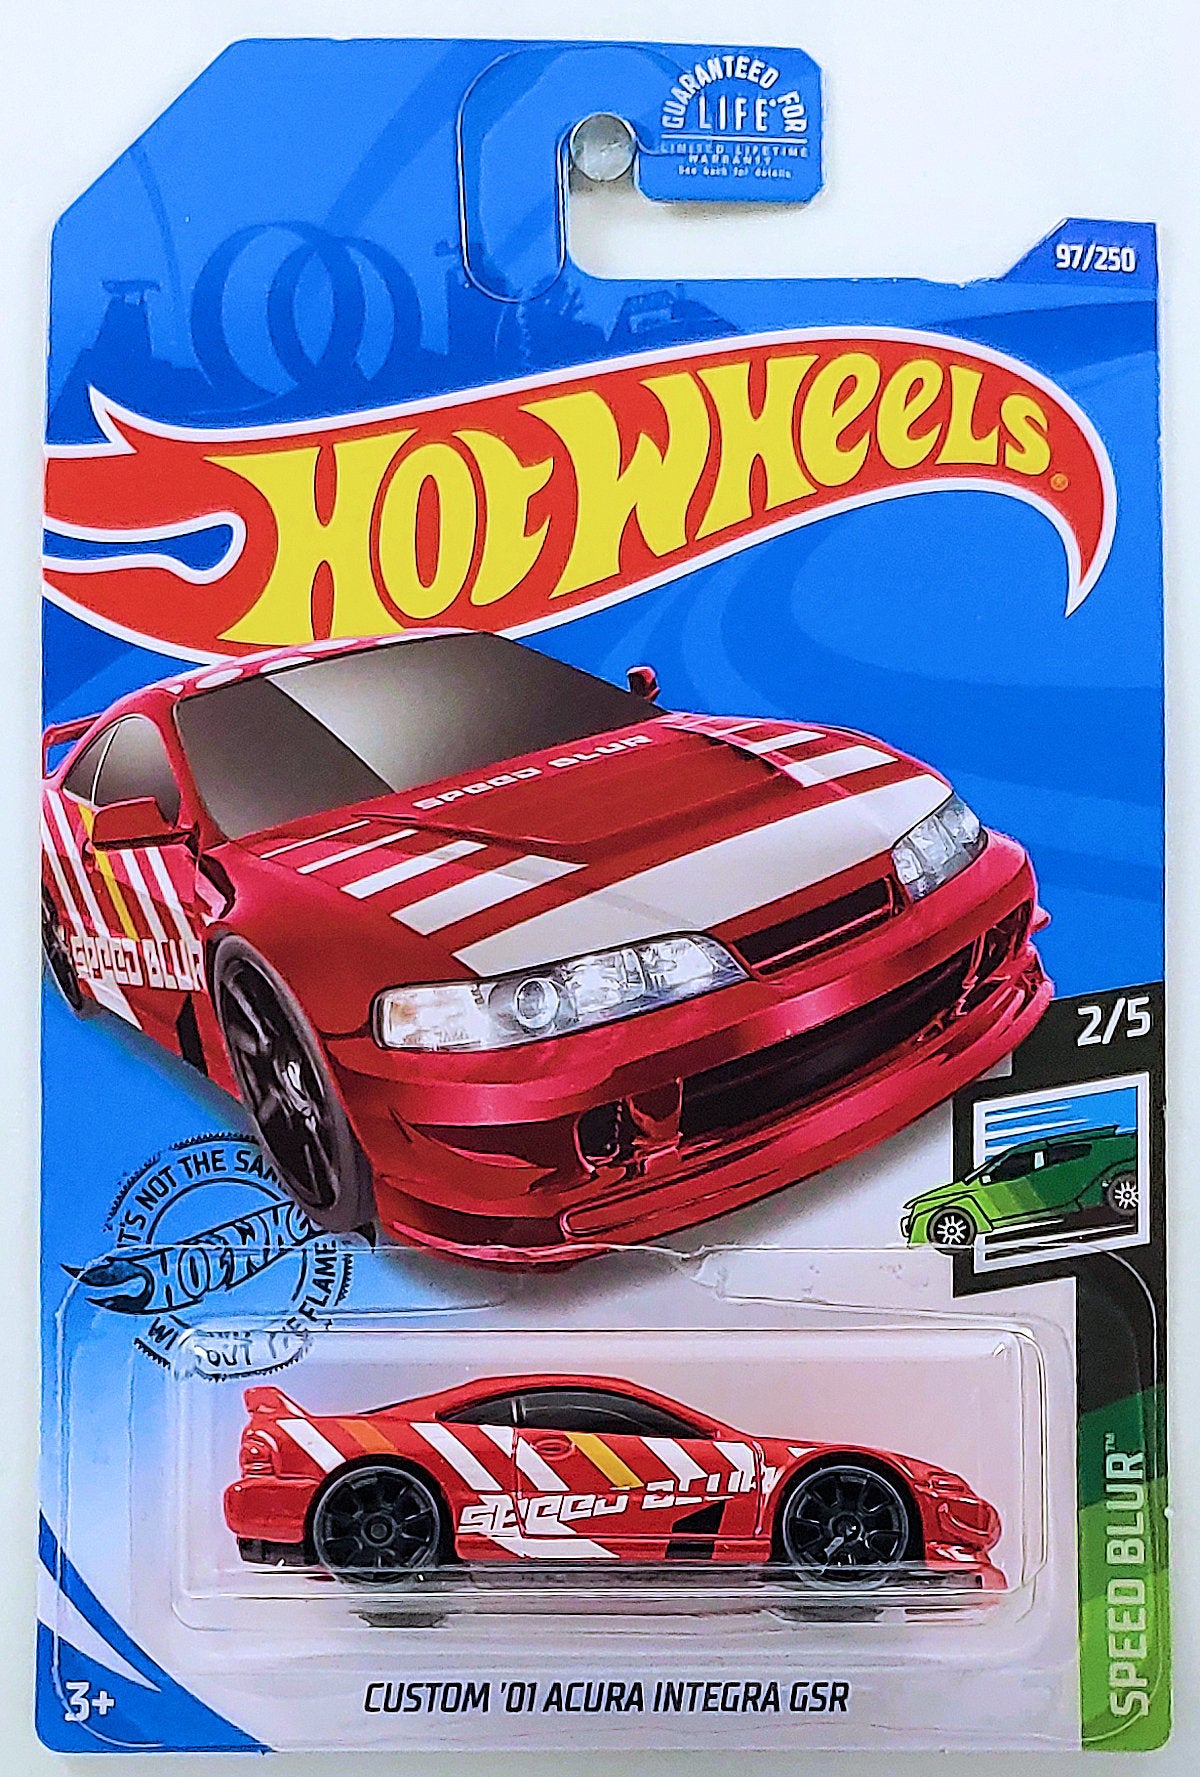 Hot Wheels 2020 - Collector # 097/250 - Speed Blur 2/5 - Custom '01 Acura Integra GSR - Red